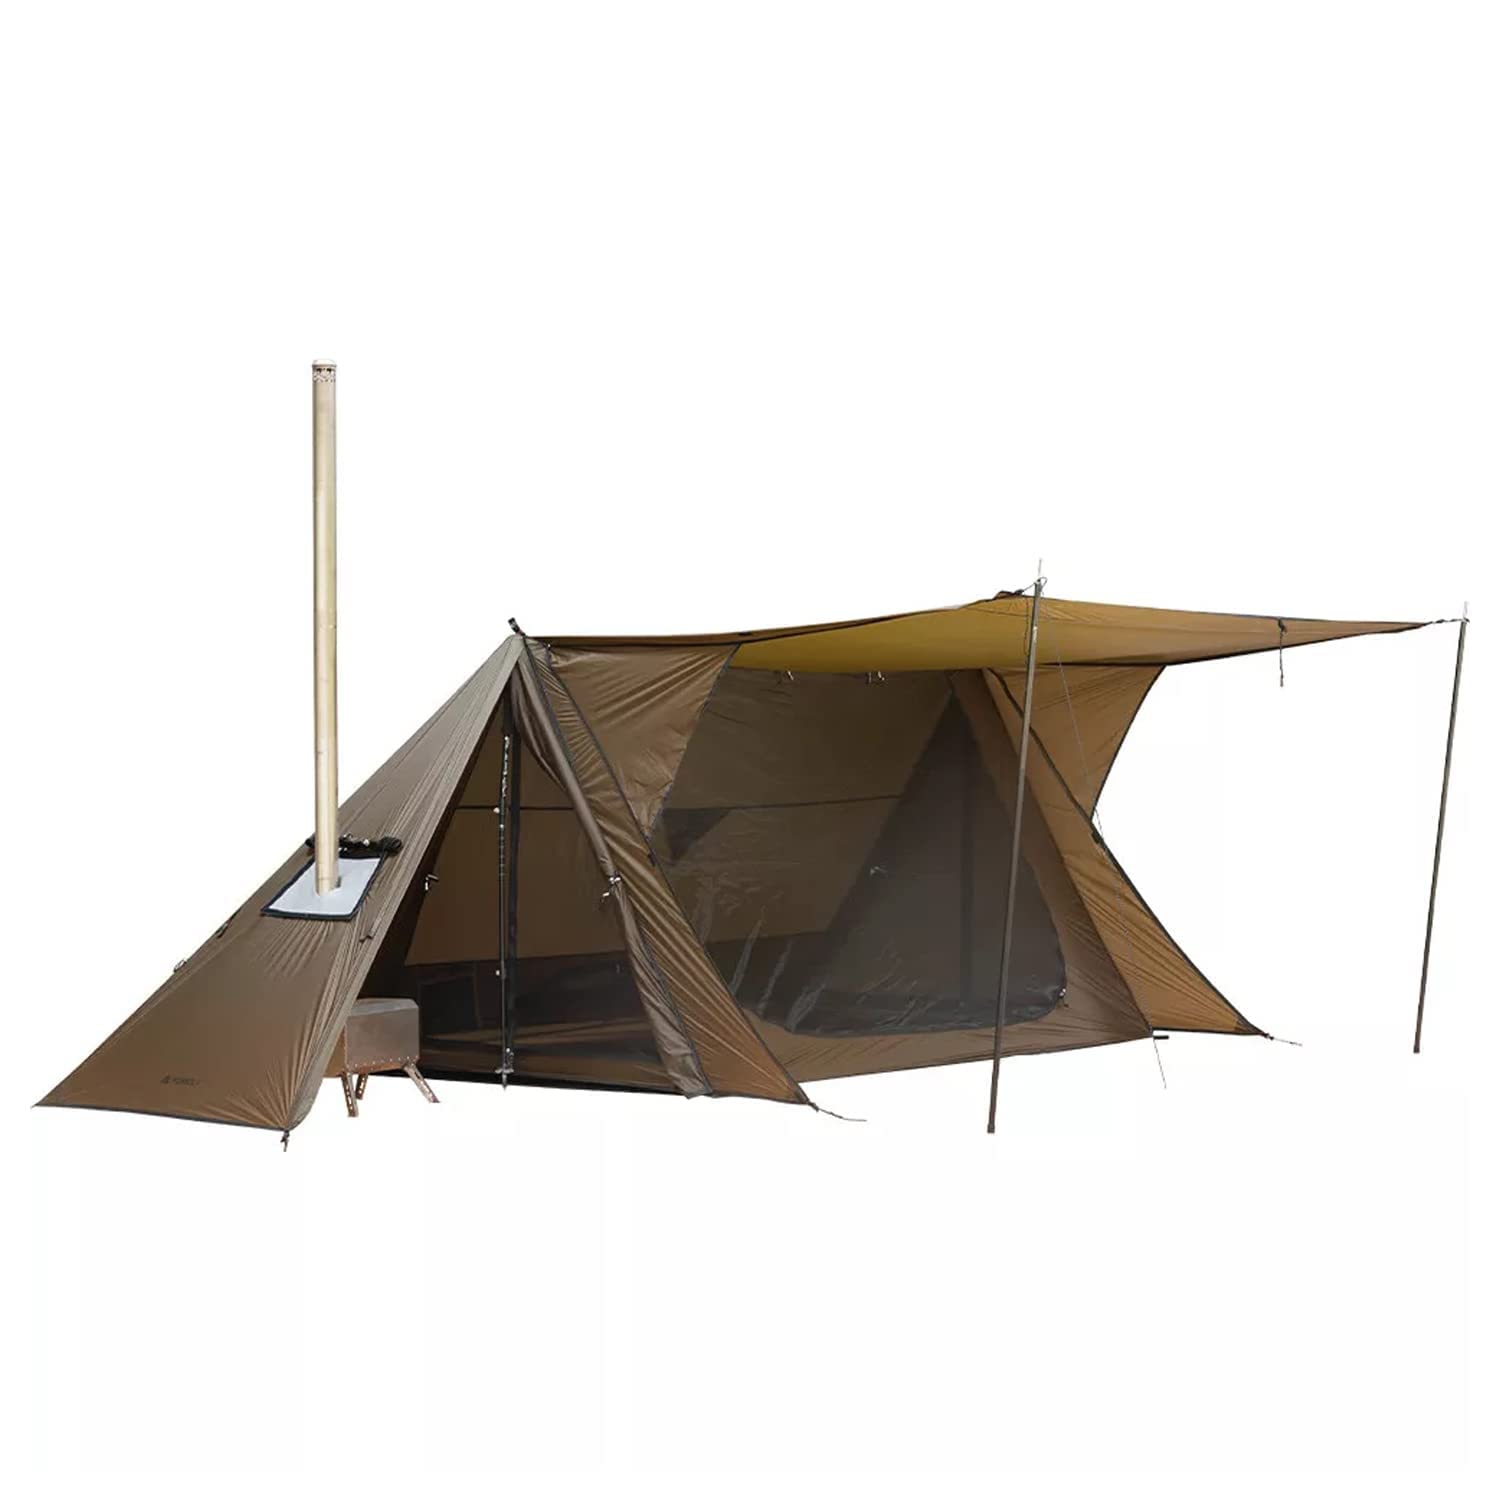 POMOLY STOVEHUT 20 Ultralight Shelter Hot Tent with Stove Jack